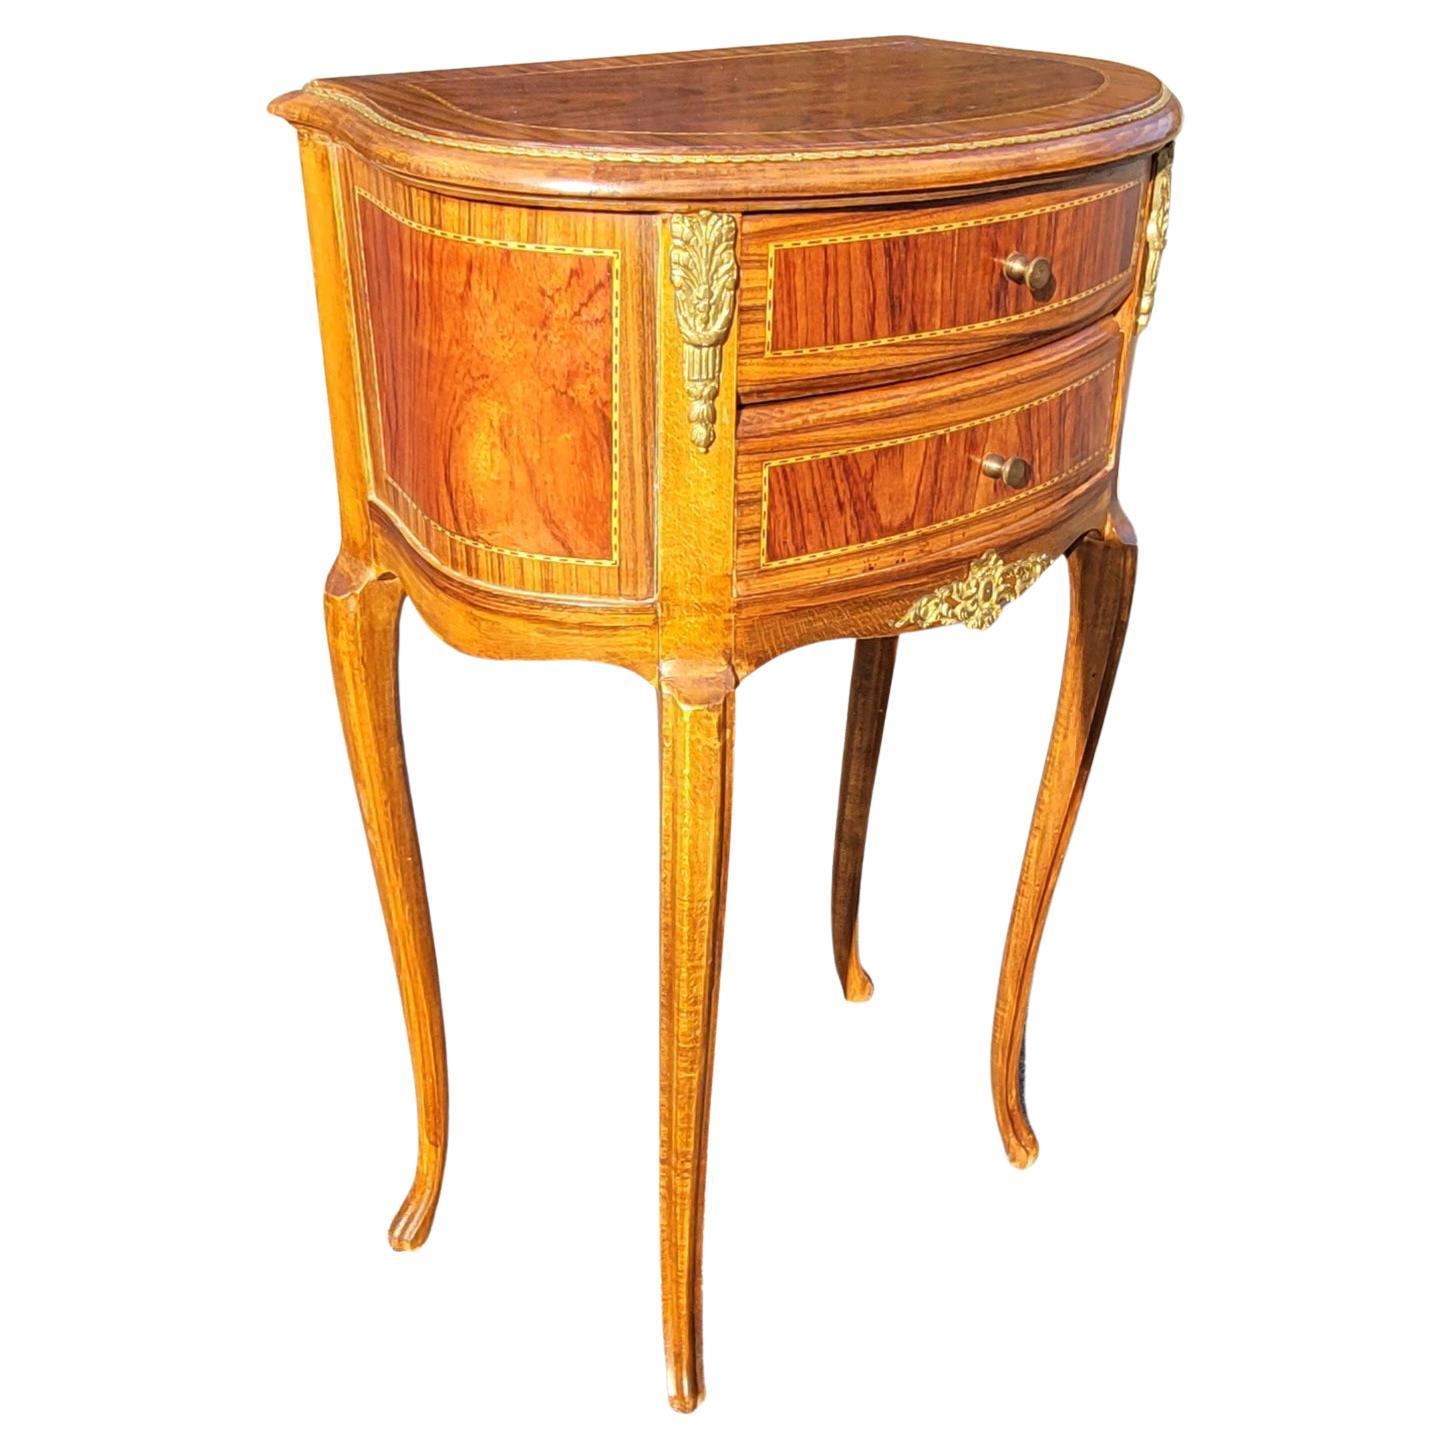 20th Century French Louis XV Walnut Kingwood Satinwood Inlaid Ormolu Side Table For Sale 2